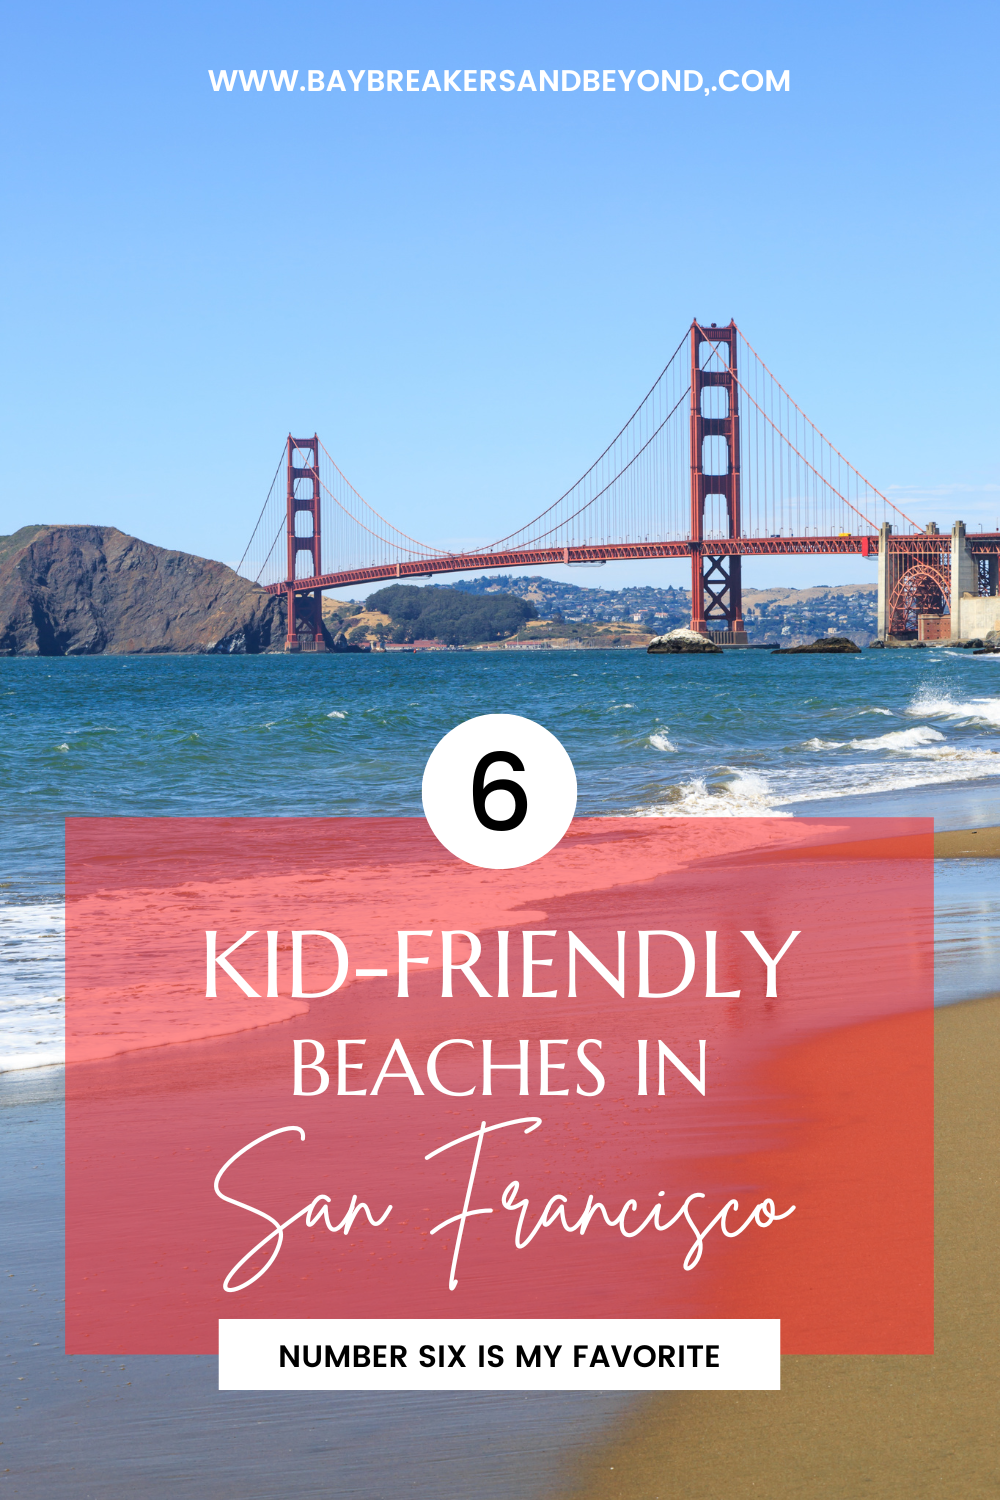 6 kid-friendly beaches in San Francisco